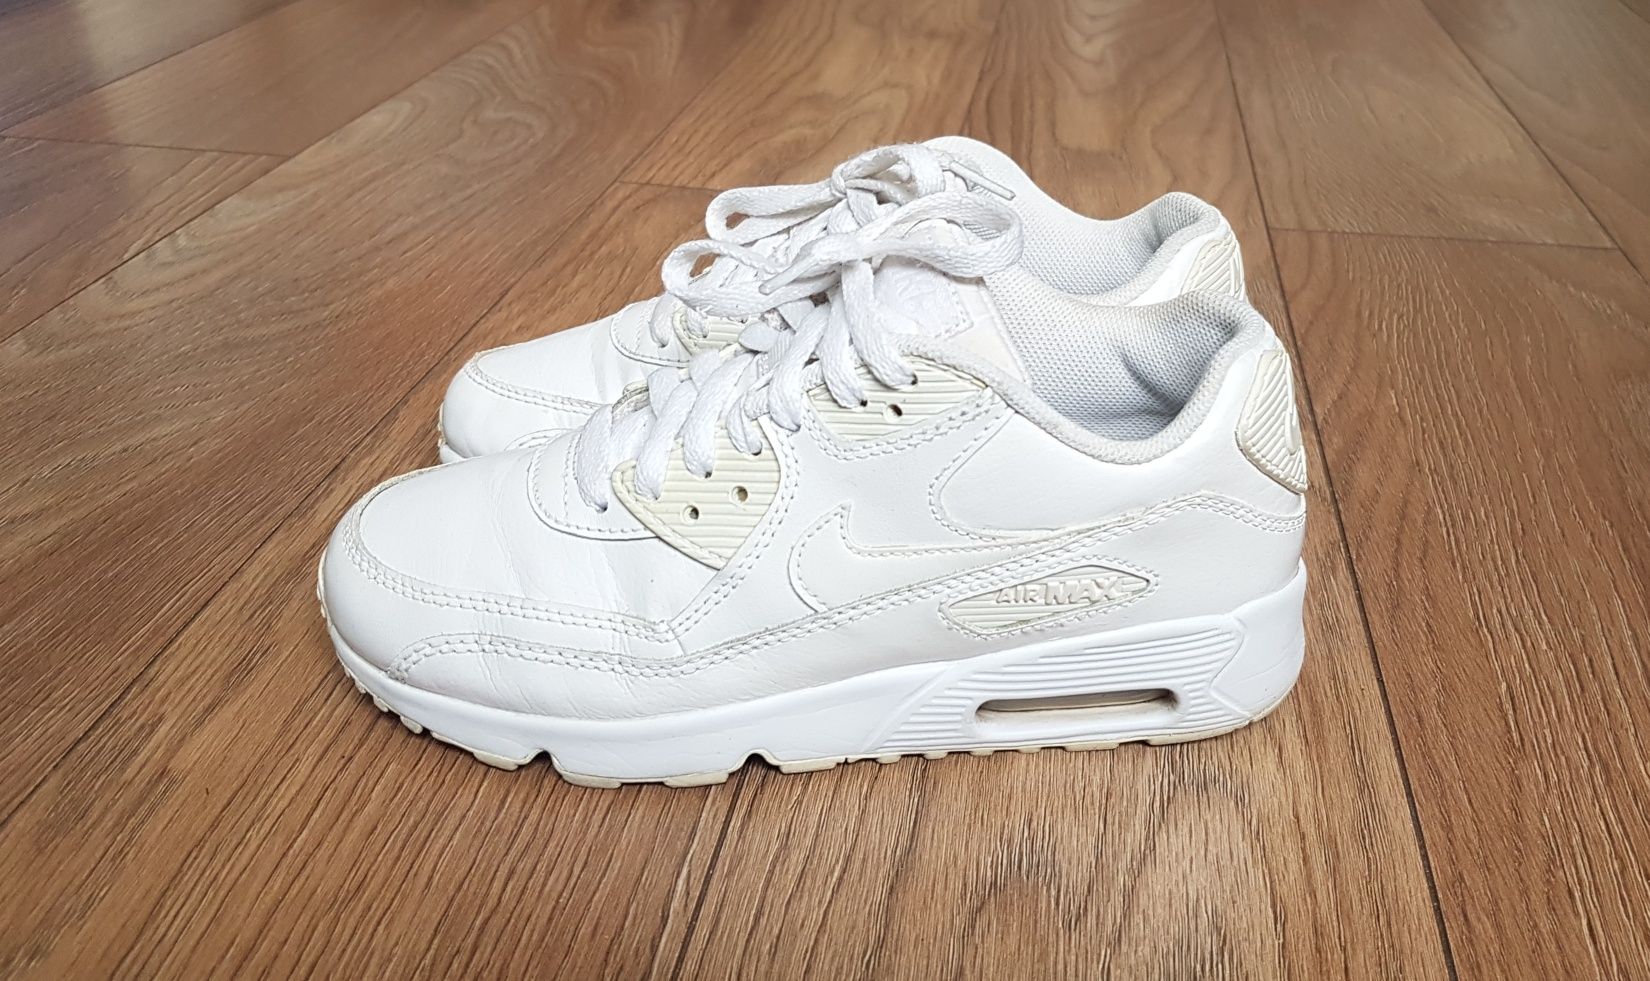 Buty Nike Air Max 90 White LTR rozmiar 37,5 okazja Sneakers